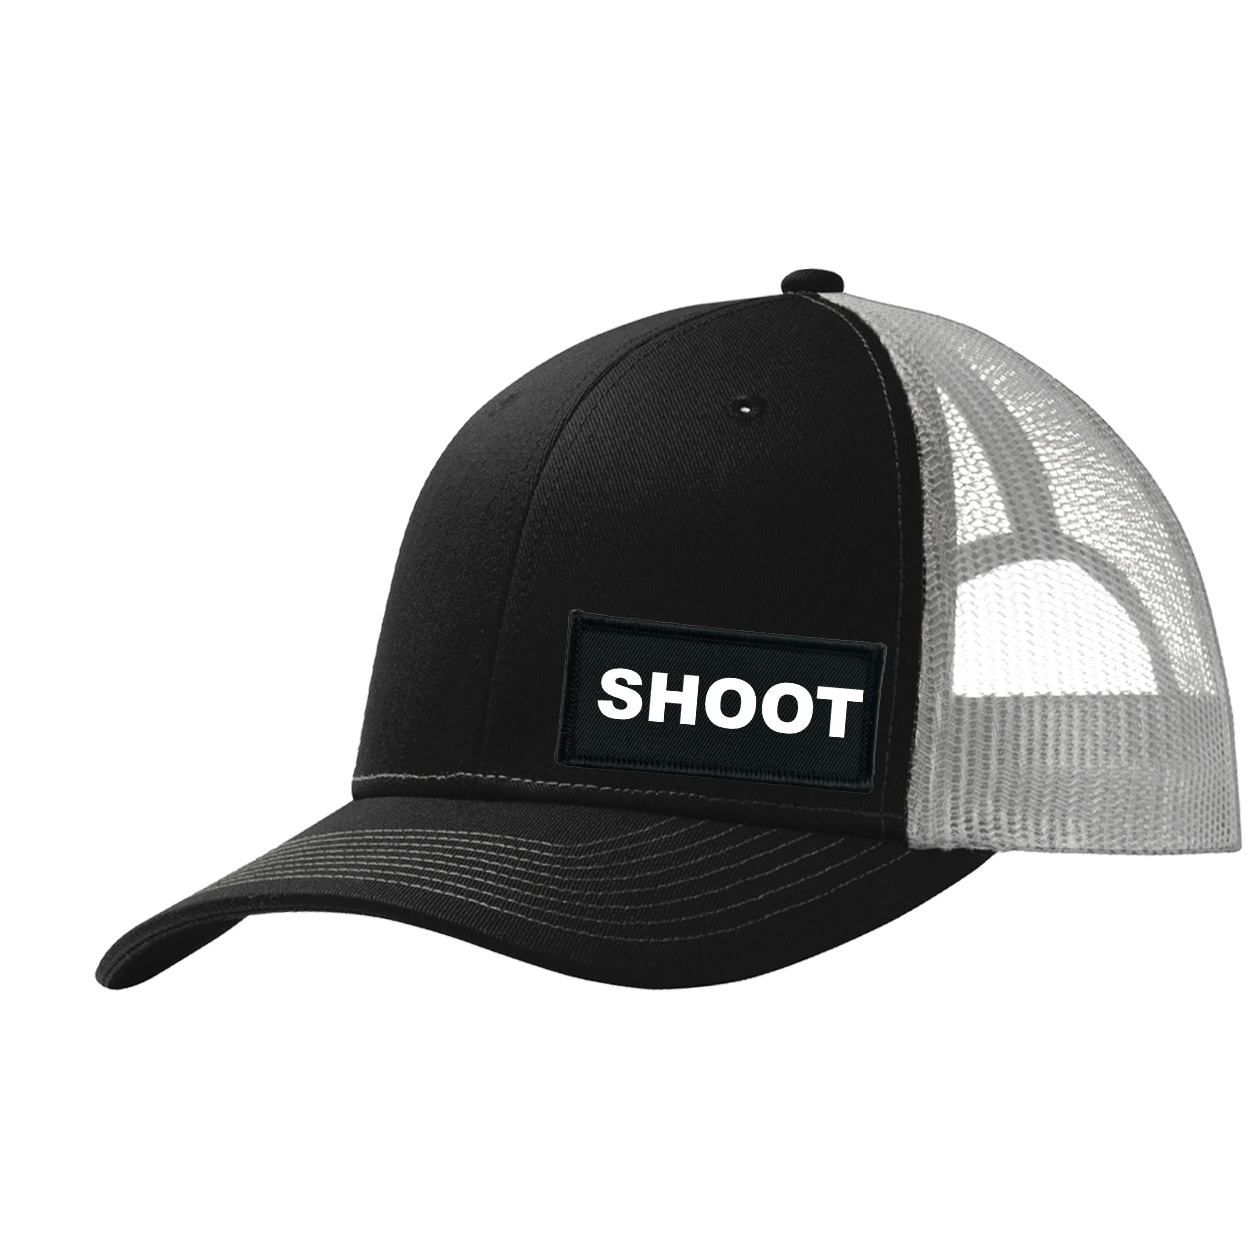 Shoot Brand Logo Night Out Woven Patch Snapback Trucker Hat Black/Gray